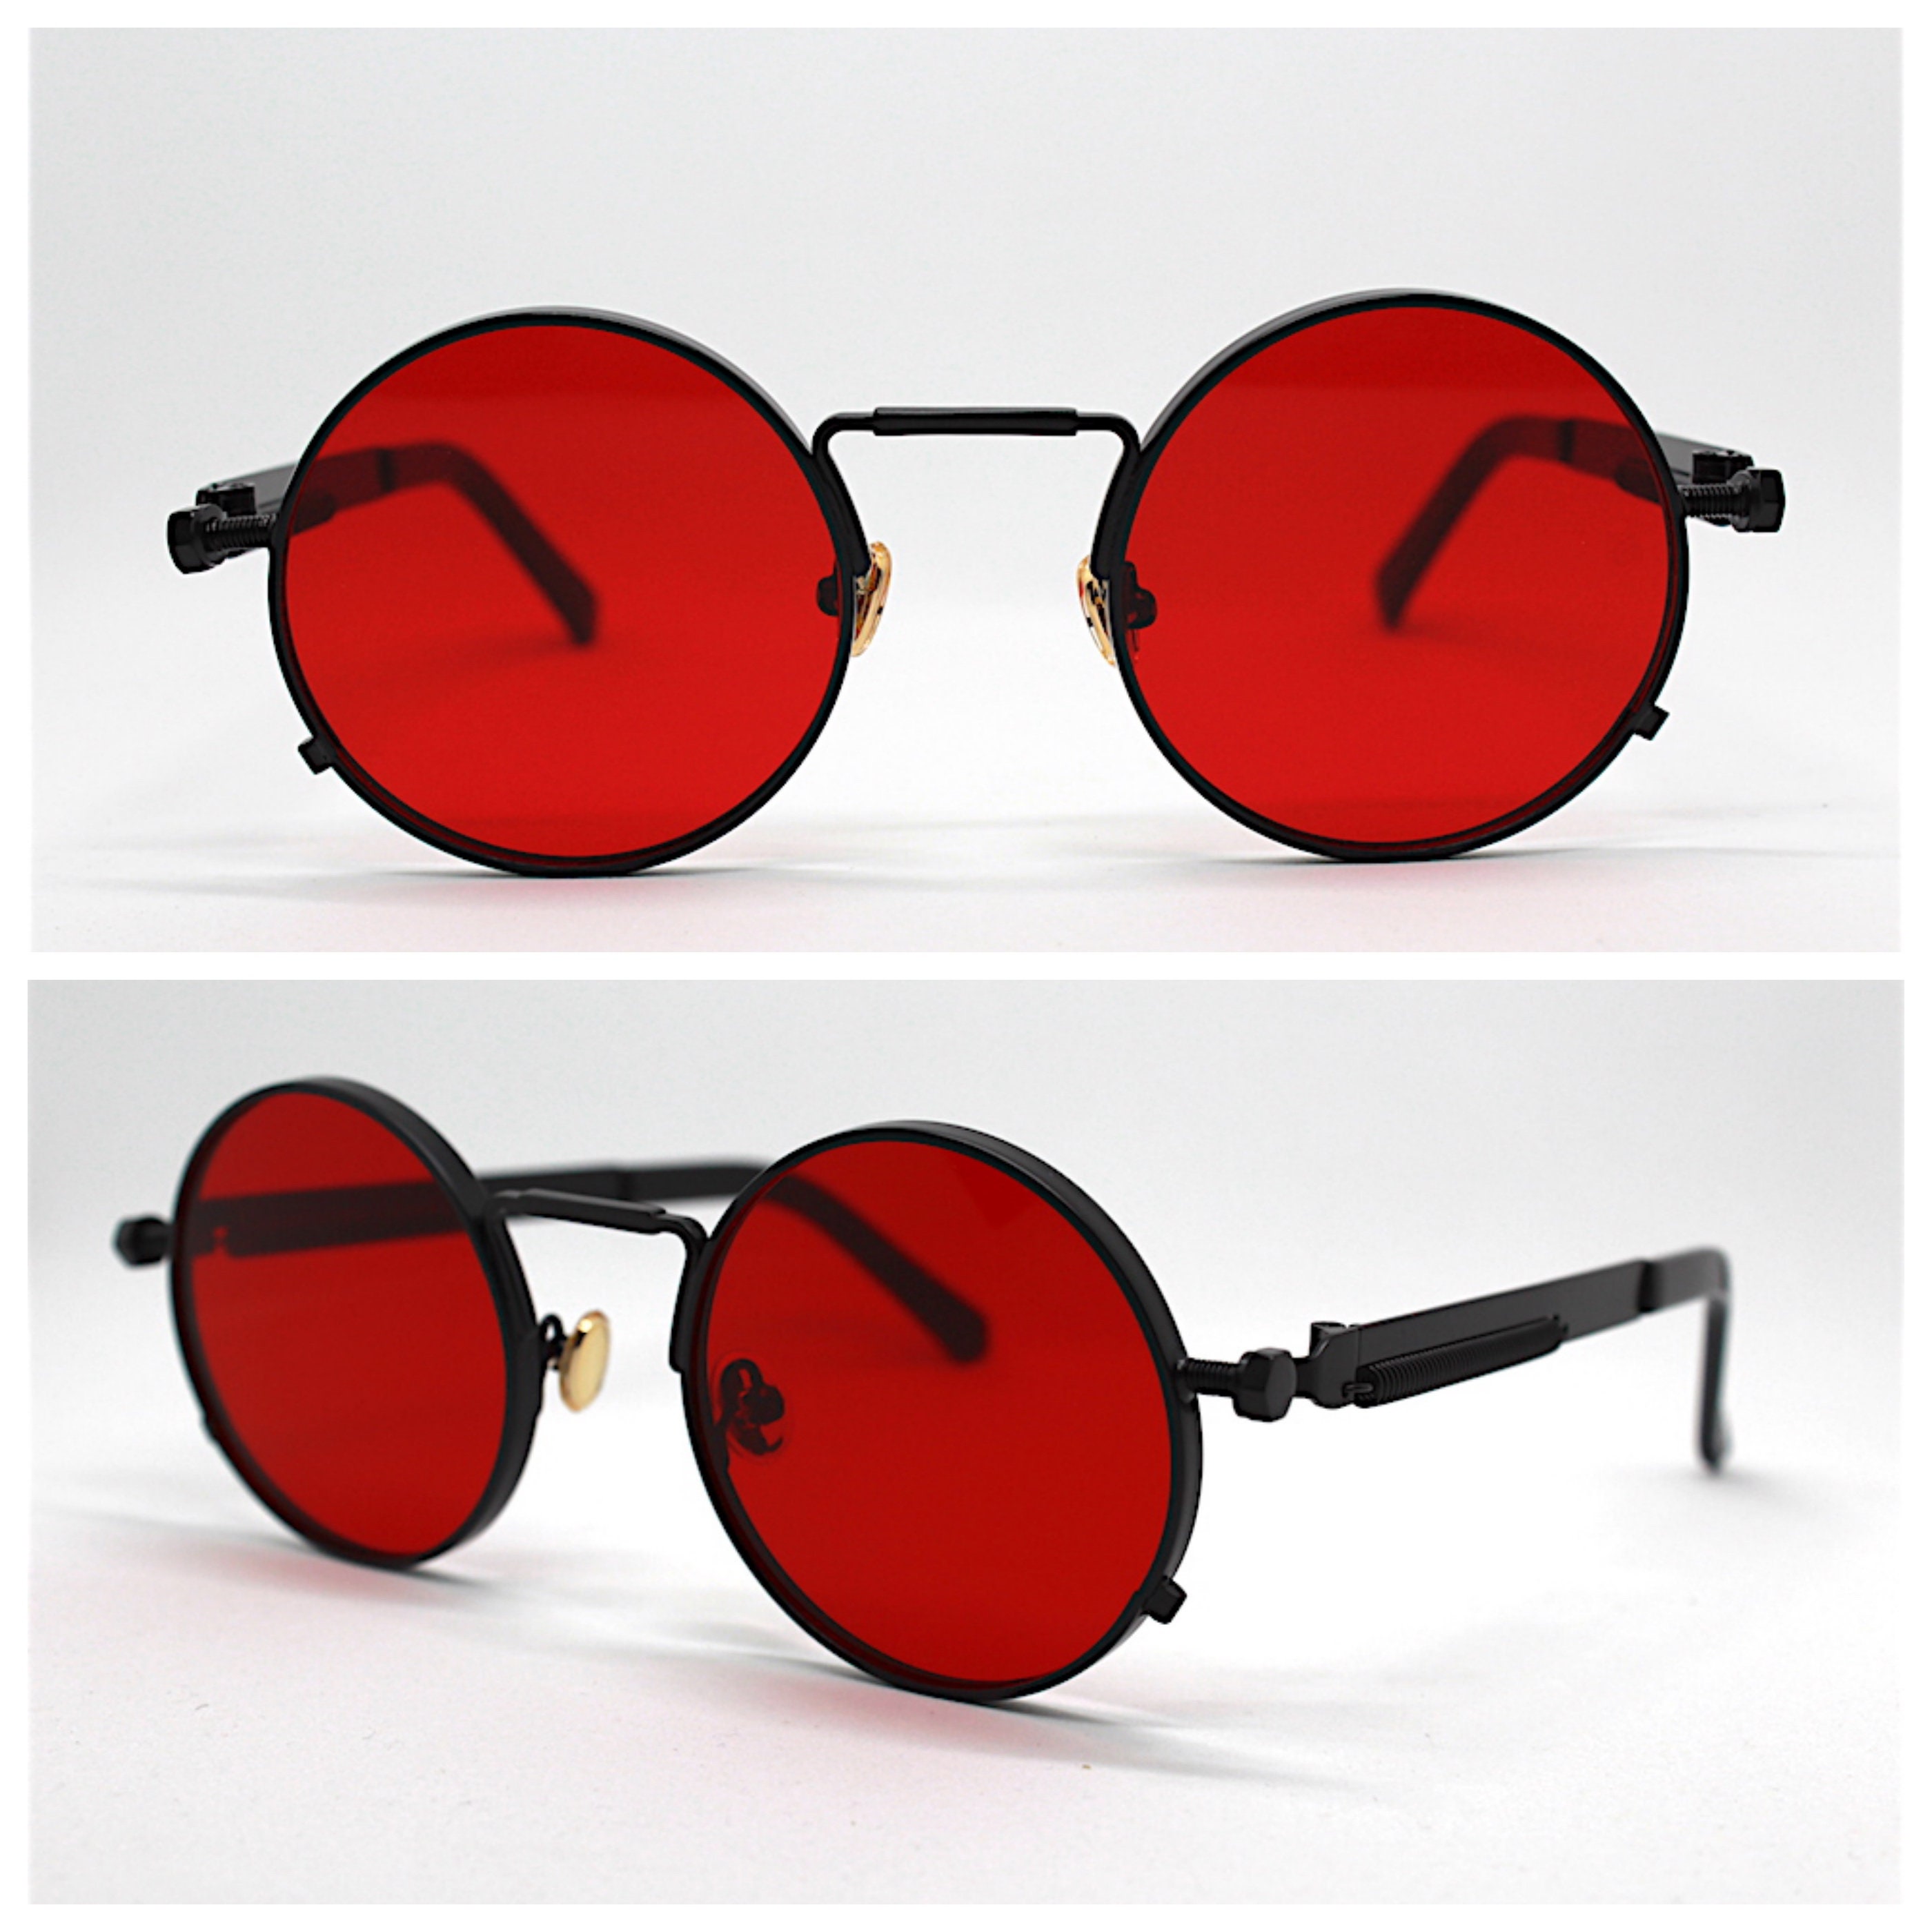 Sunglasses man woman retro round oval BLACK RED, Round sunglasses man ...